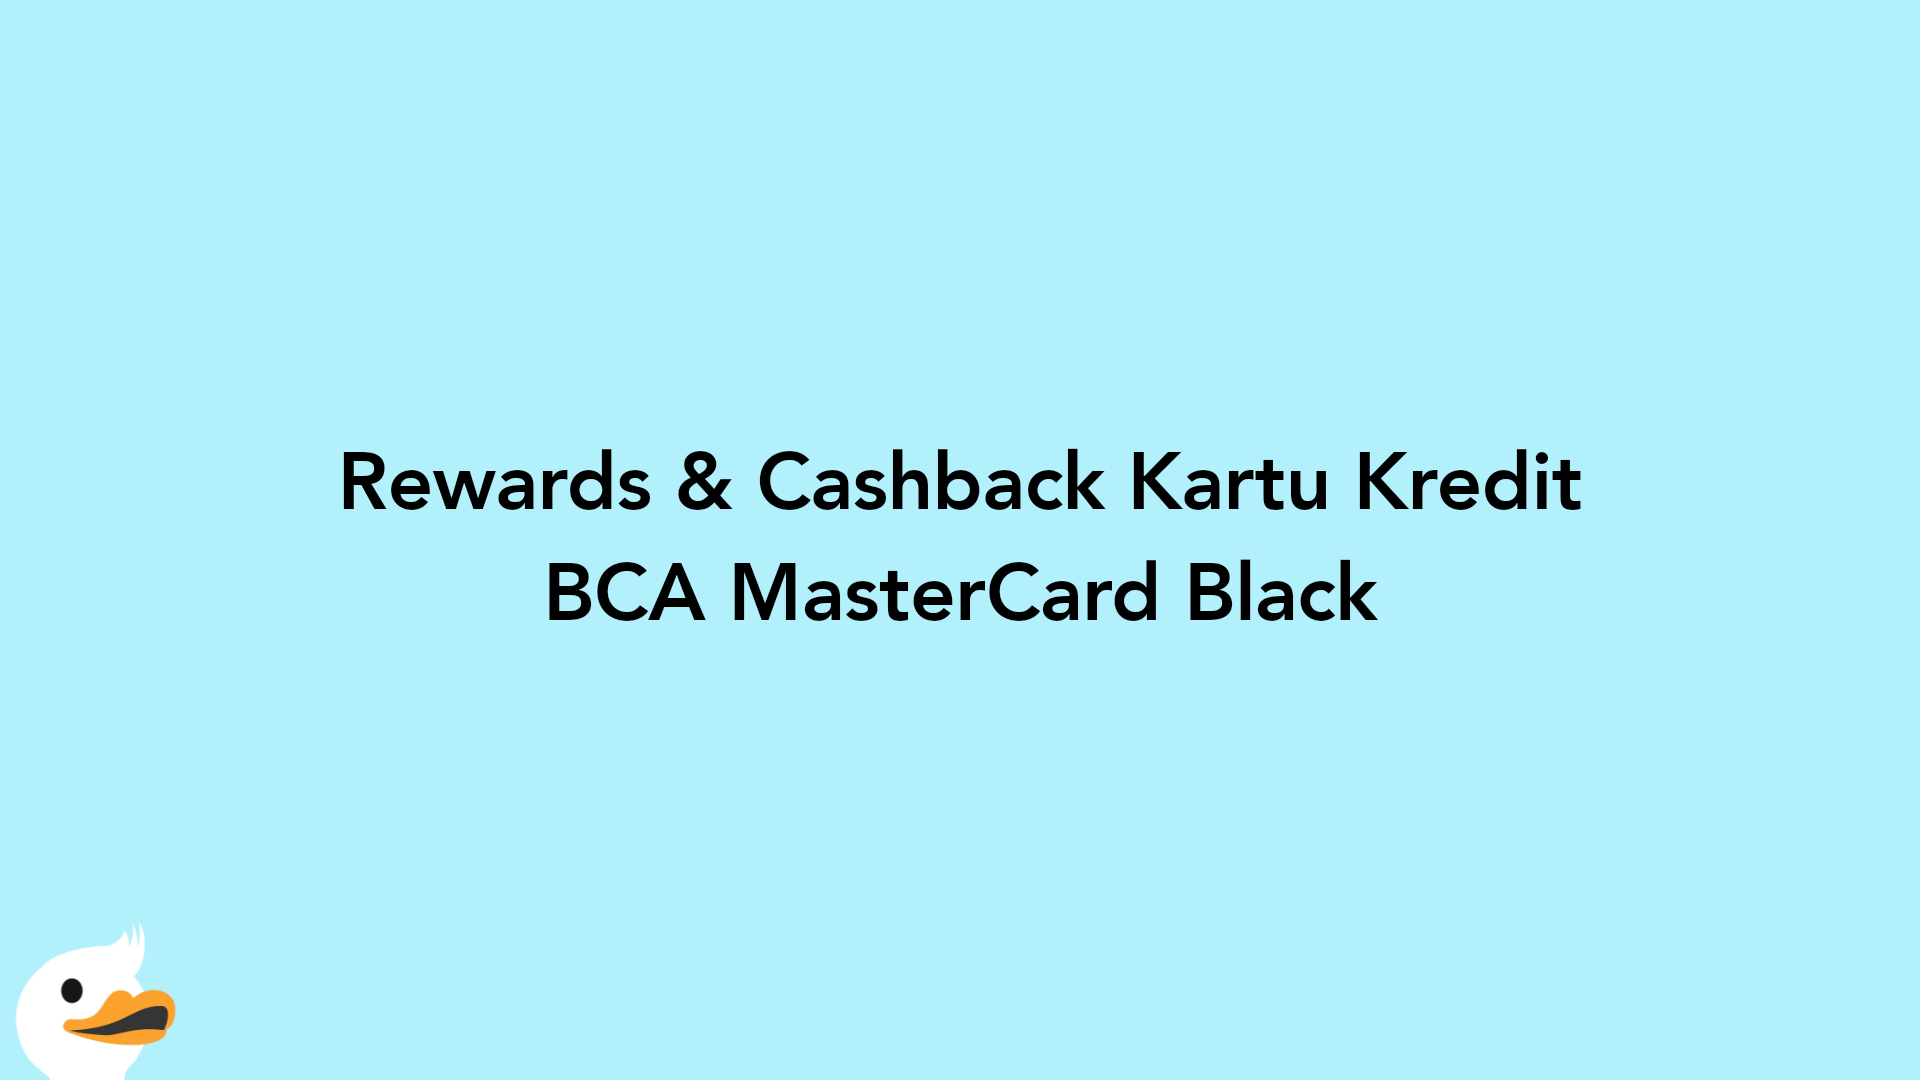 Rewards & Cashback Kartu Kredit BCA MasterCard Black